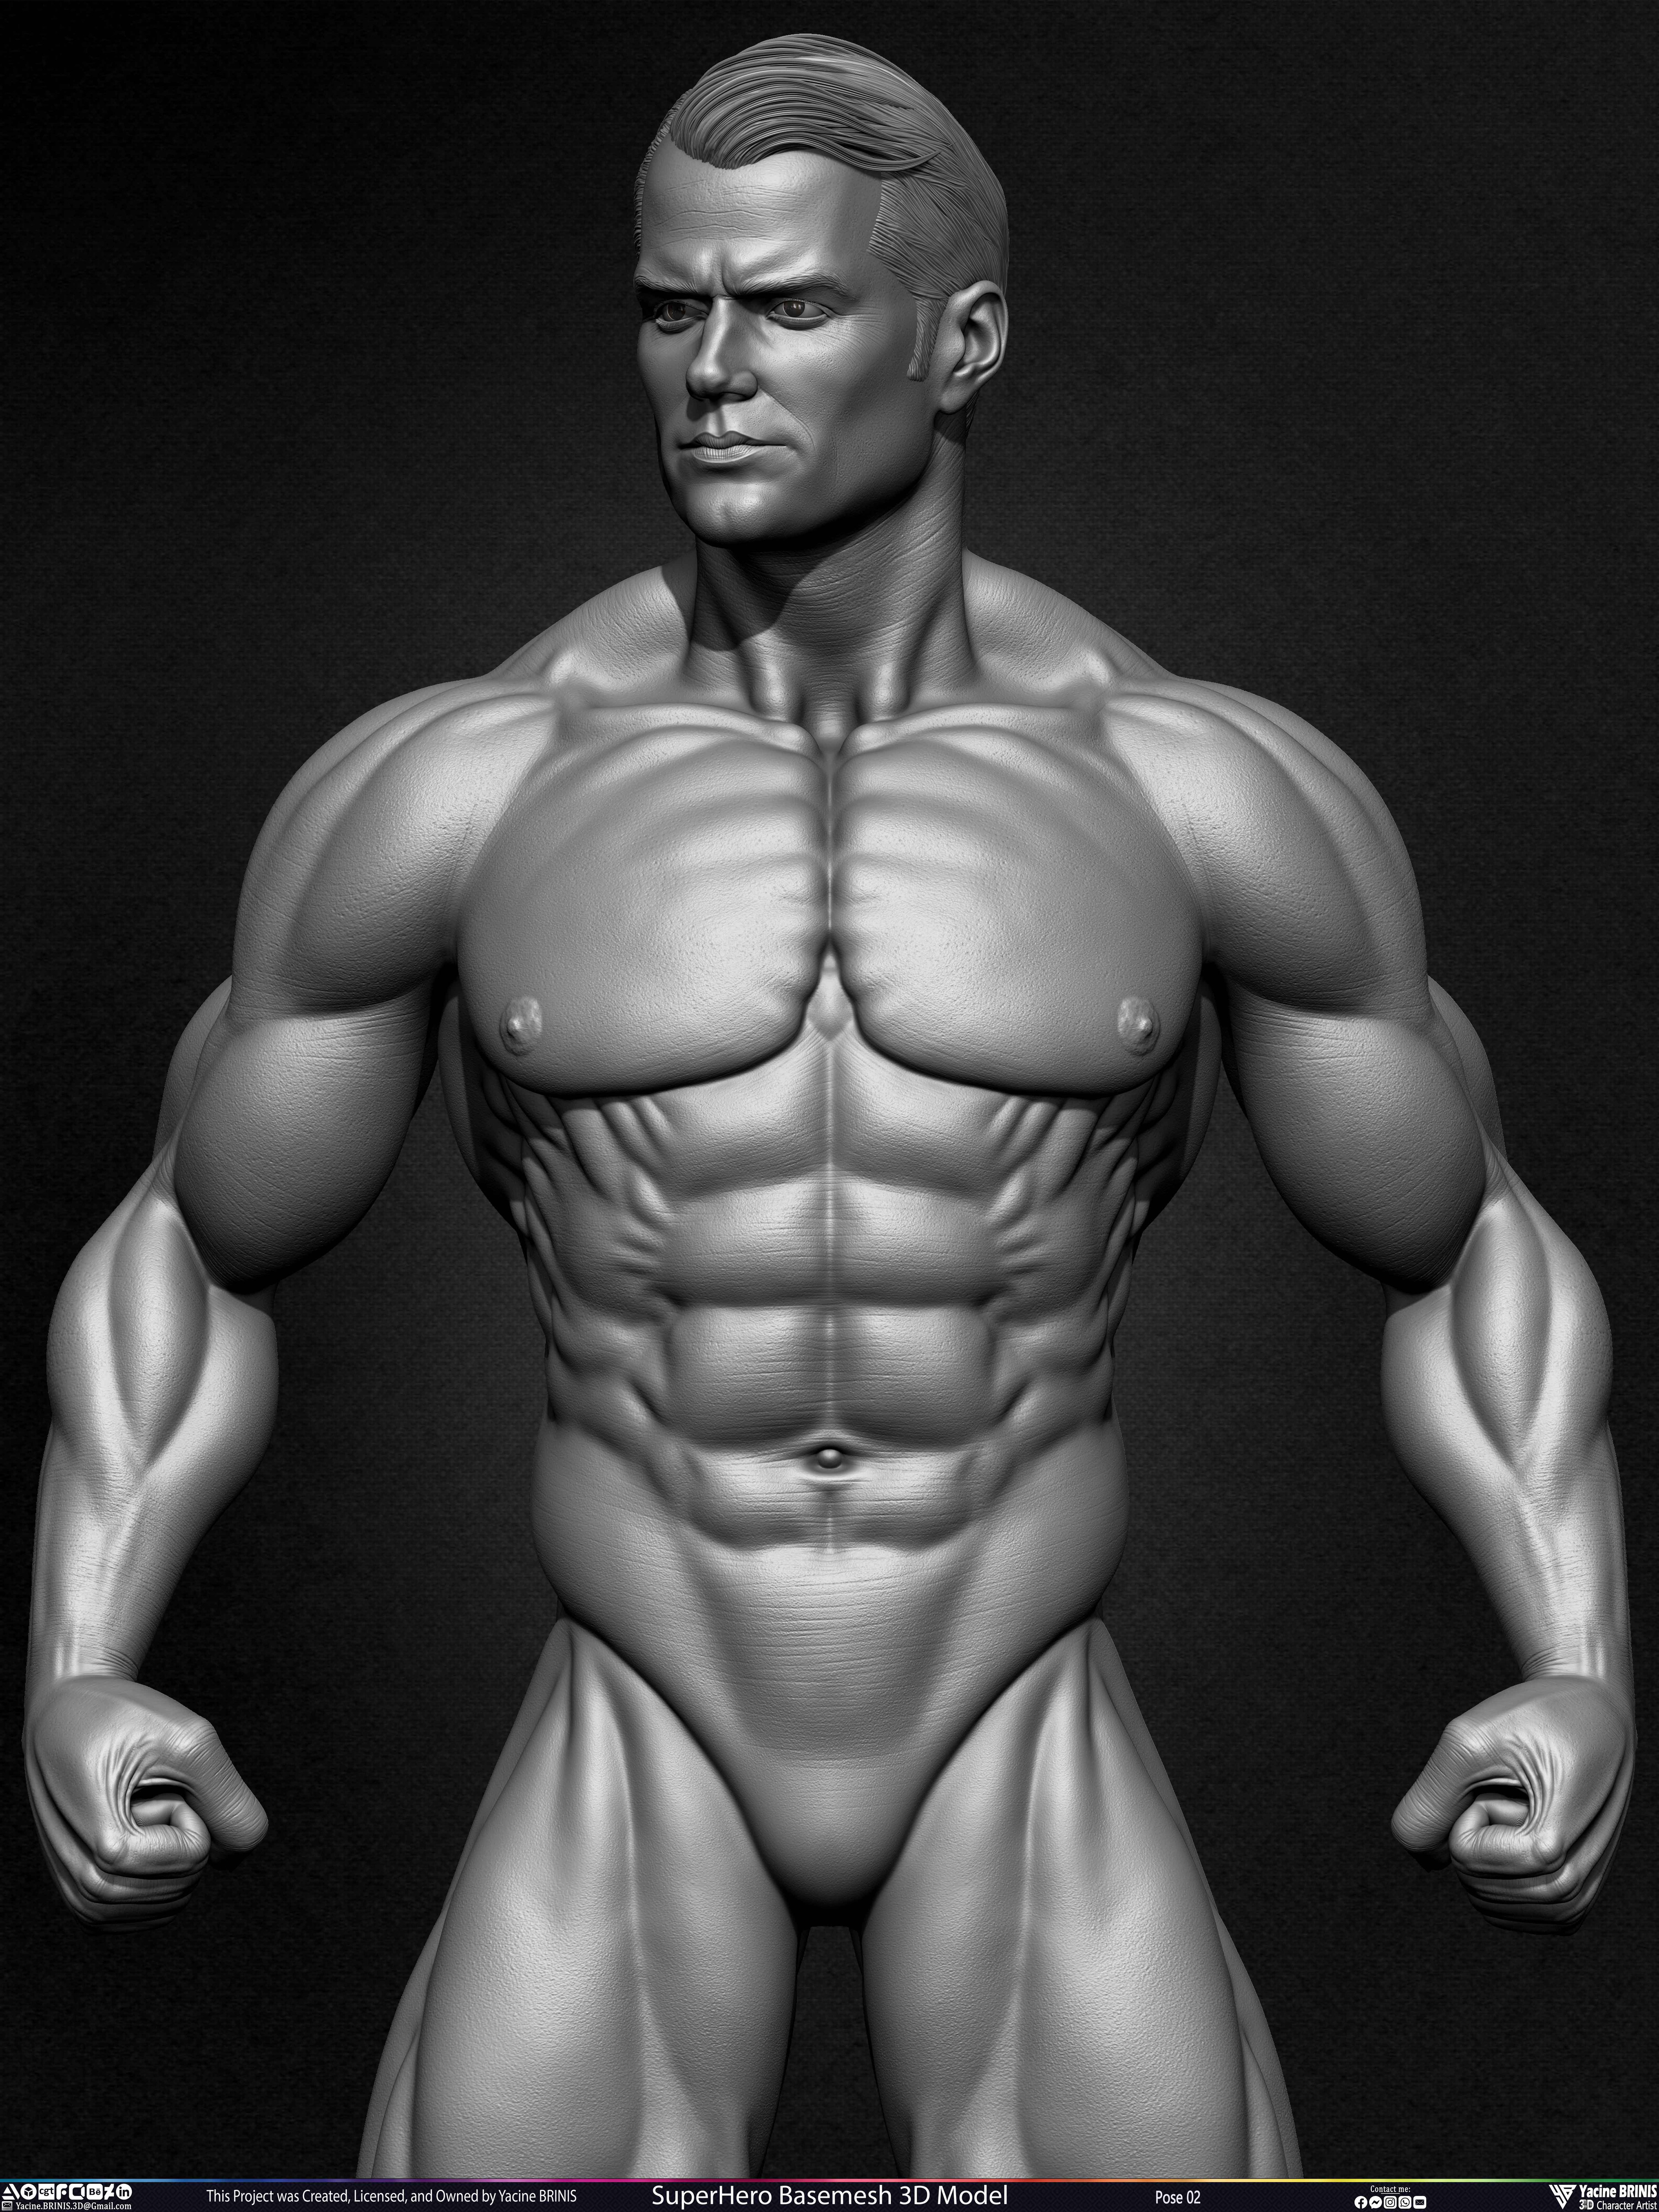 Super-Hero Basemesh 3D Model - Henry Cavill- Man of Steel - Superman - Pose 02 Sculpted by Yacine BRINIS Set 014